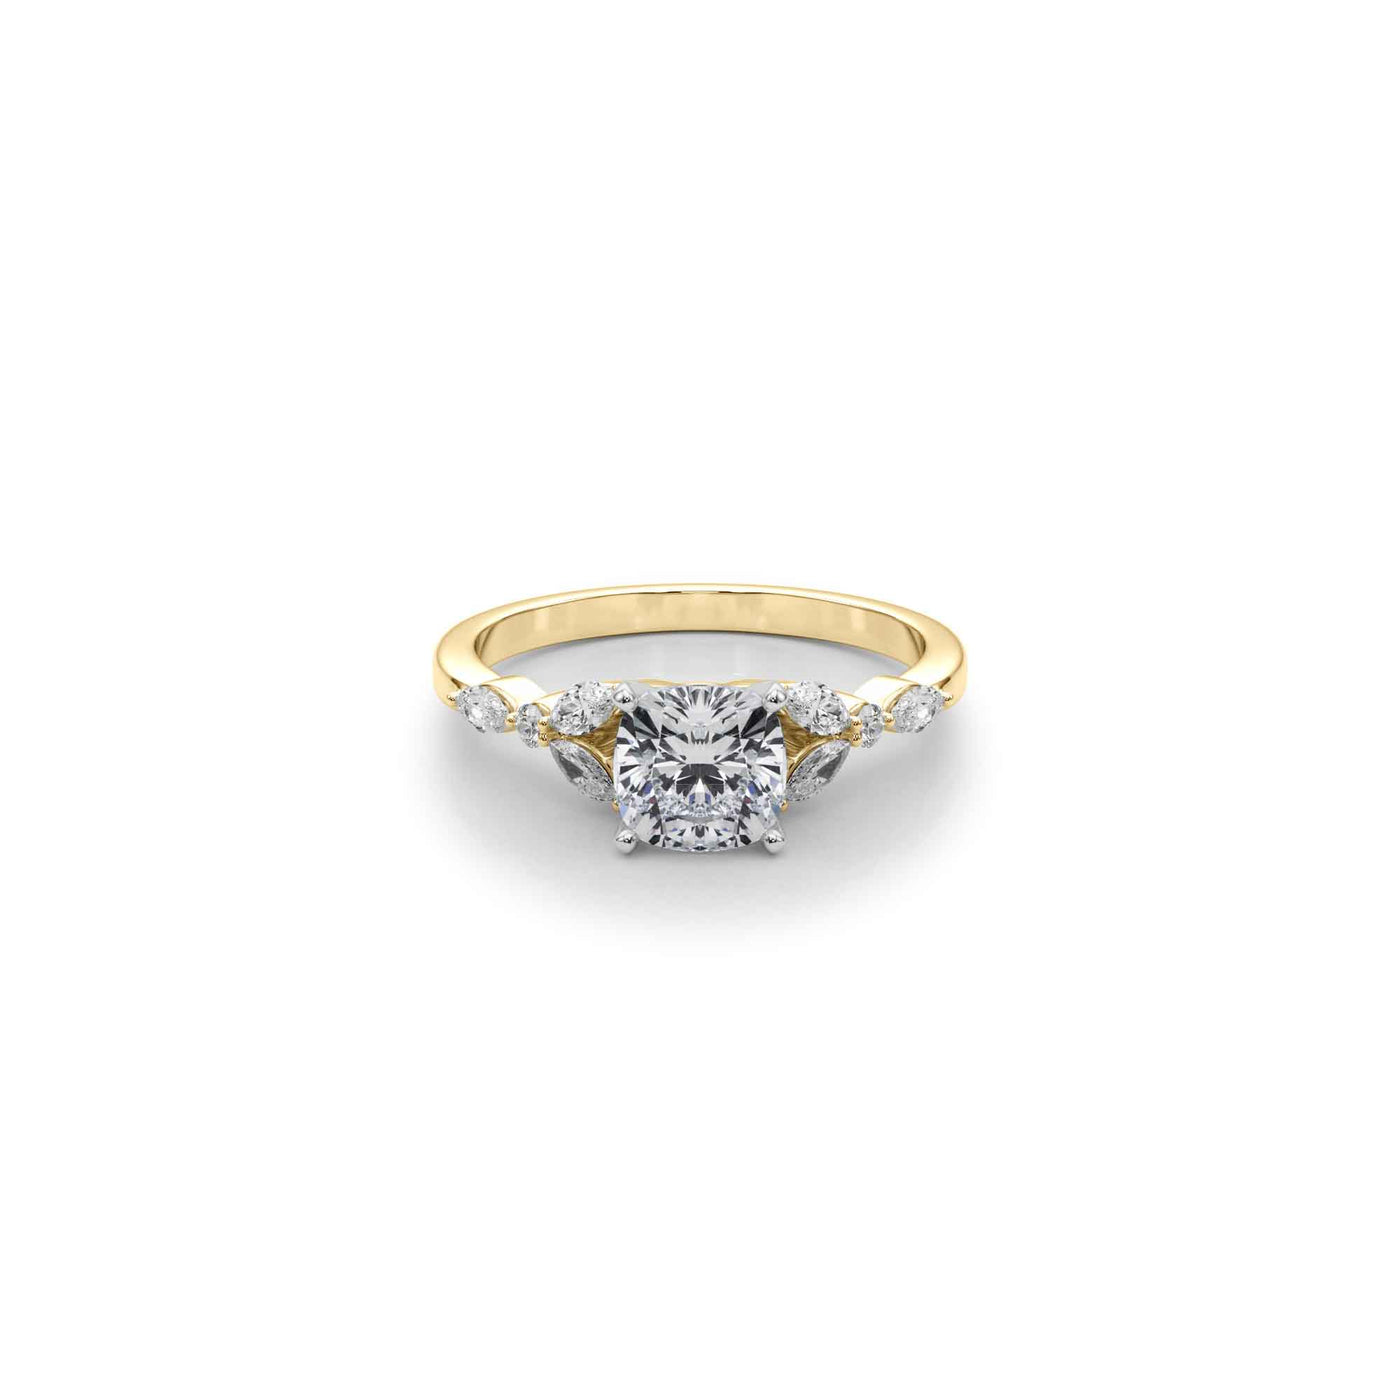 The Tansy Diamond Engagement Ring | Lisa Robin